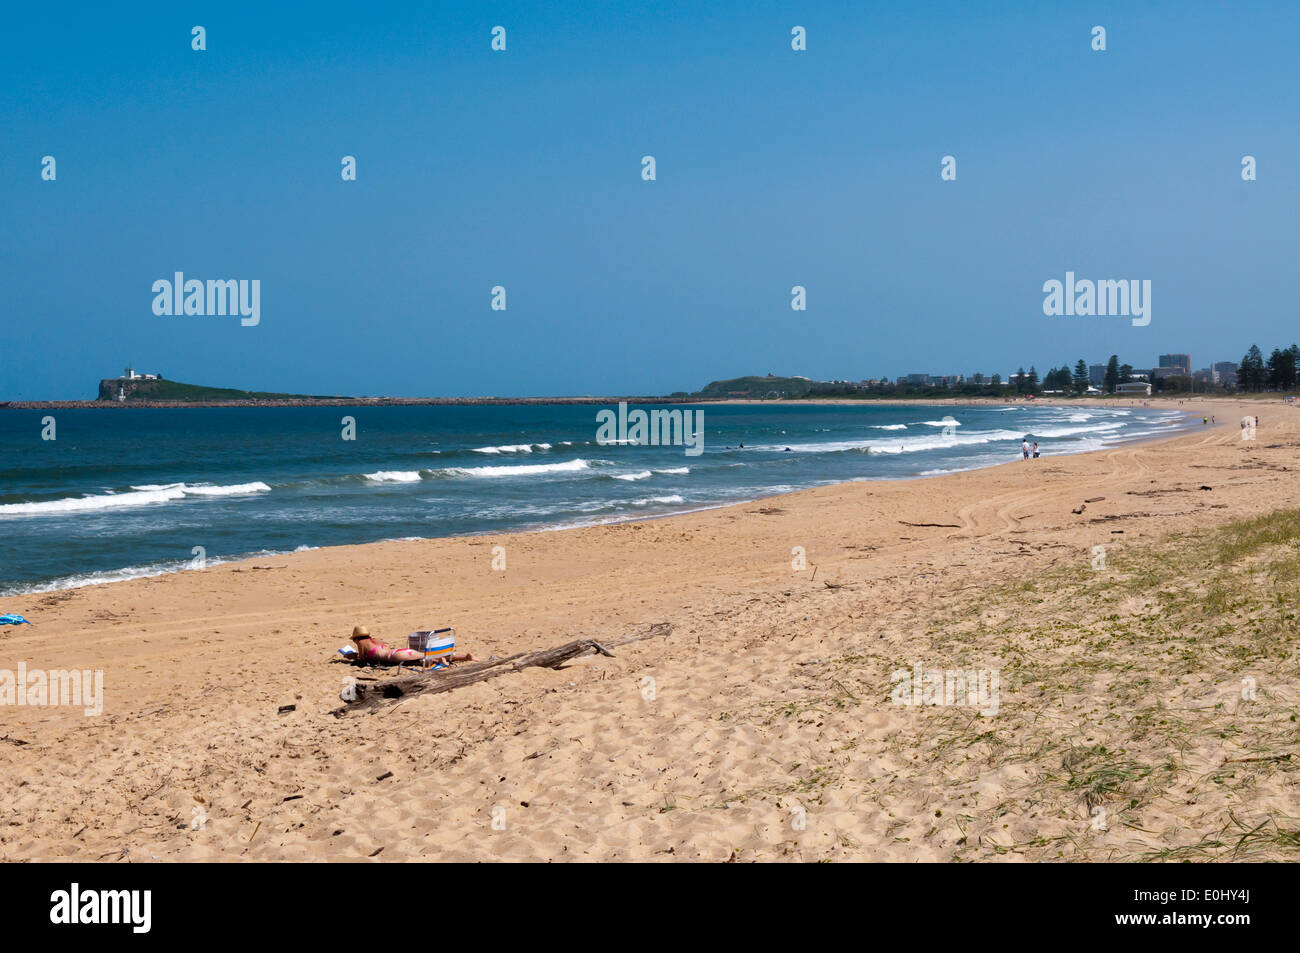 Sunbathing on the beach at Stockton, Newcastle, New South Wales, Australia. Stock Photo